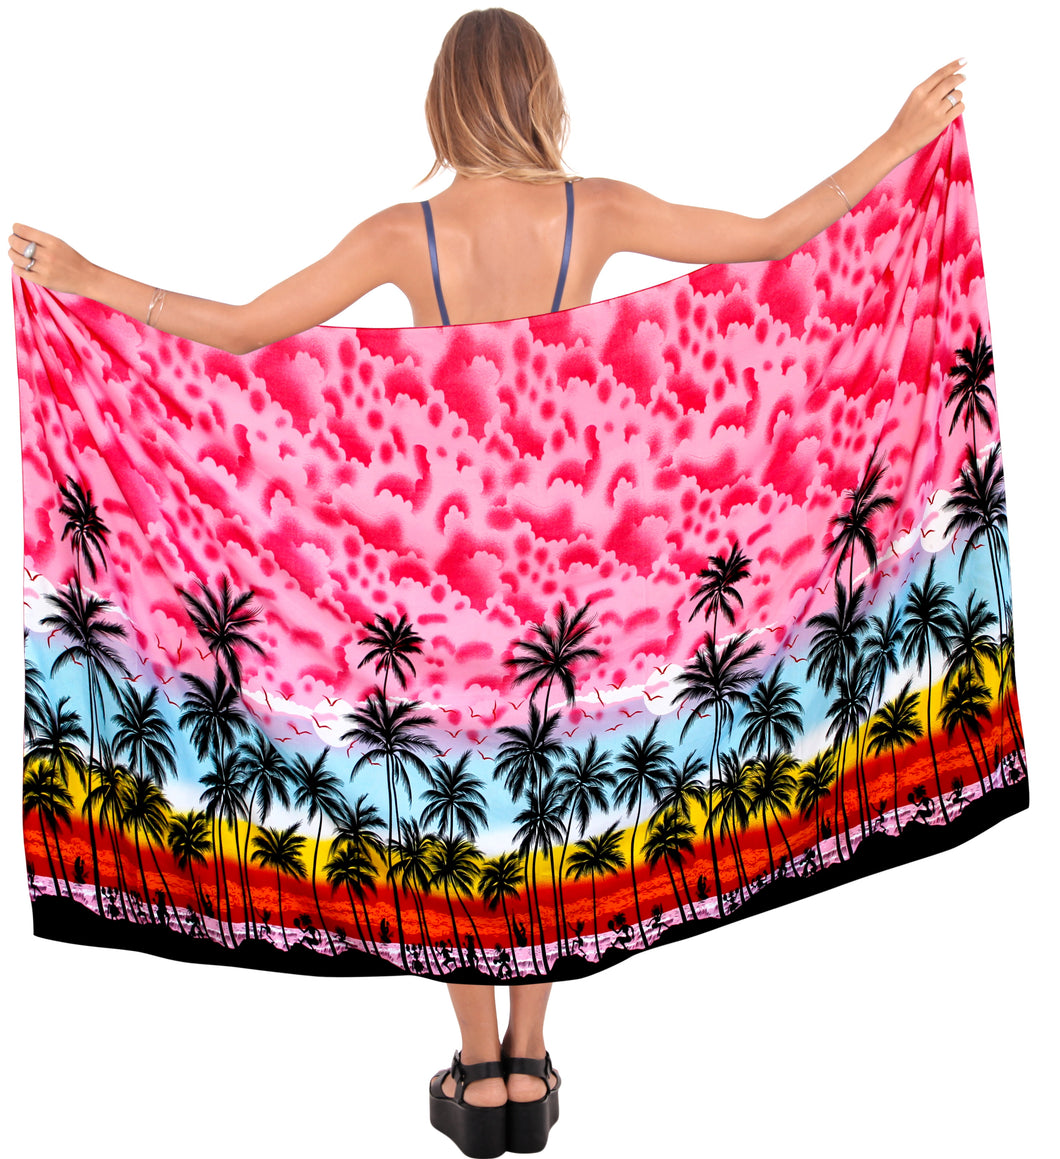 la-leela-swimwear-soft-light-women-bathing-suit-swimsuit-sarong-Palm-Tree-printed-Pink